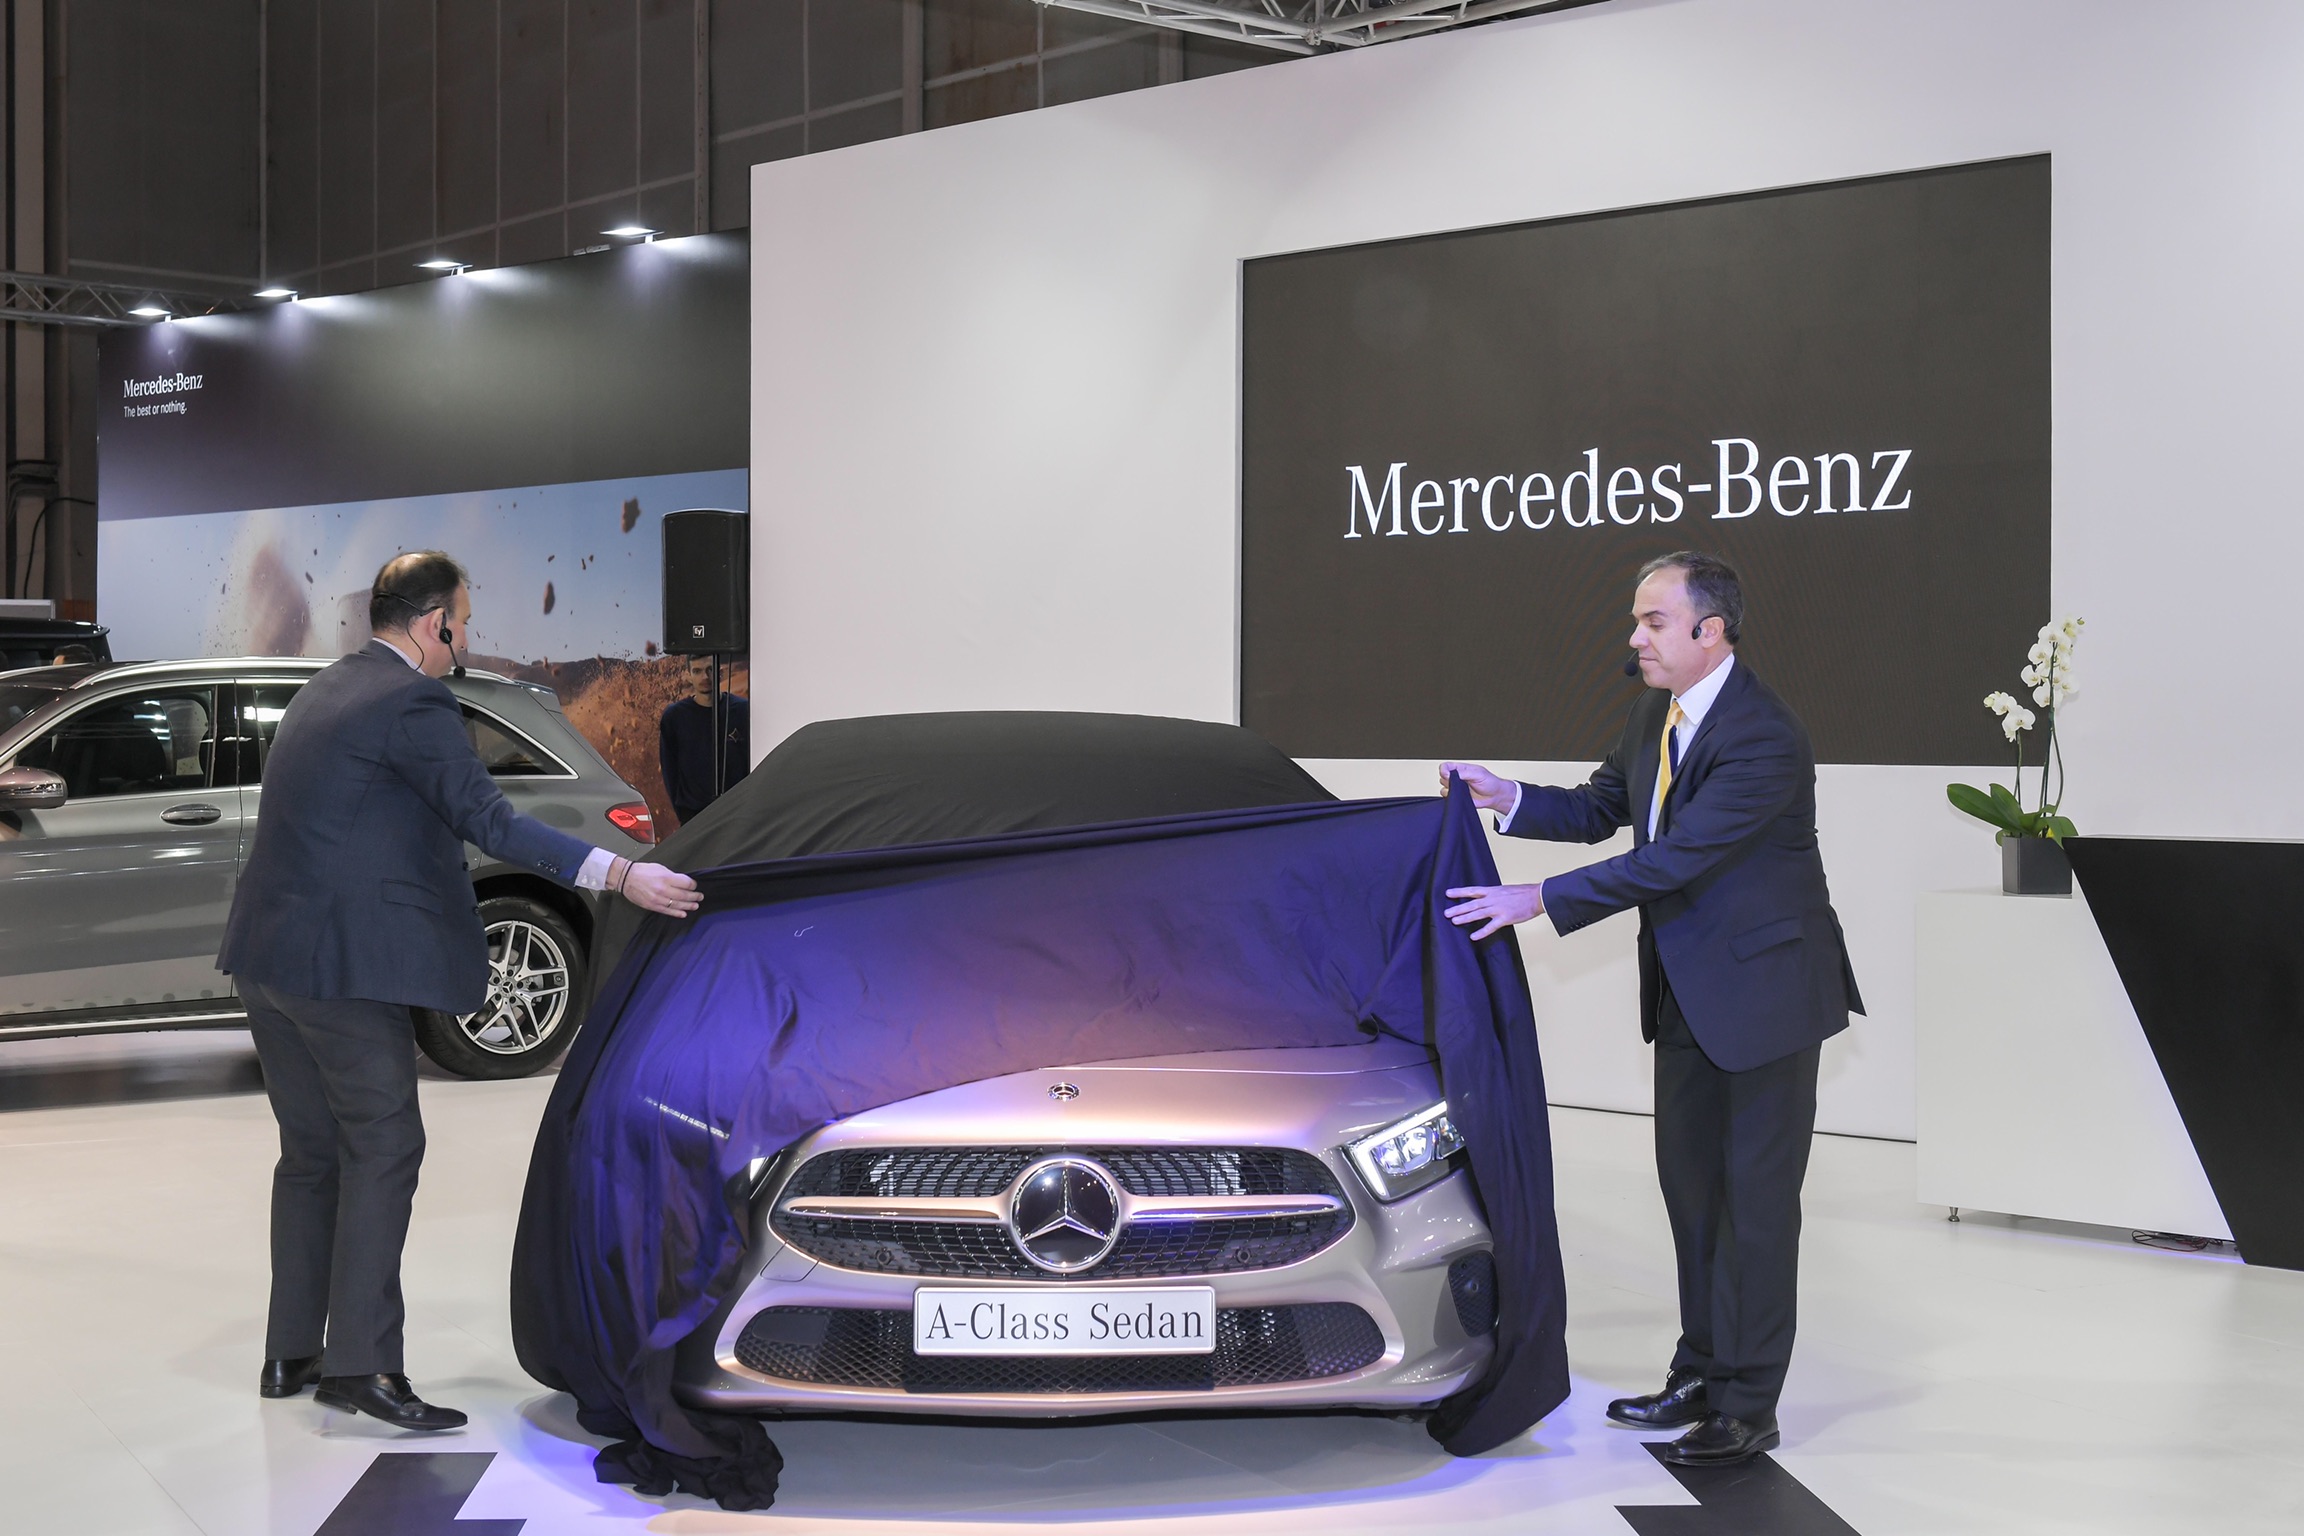 H Mercedes-Benz Ελλάς στην Αυτοκίνηση-ΕΚΟ 2018 αποκάλυψε την νέα Α-Class Sedan